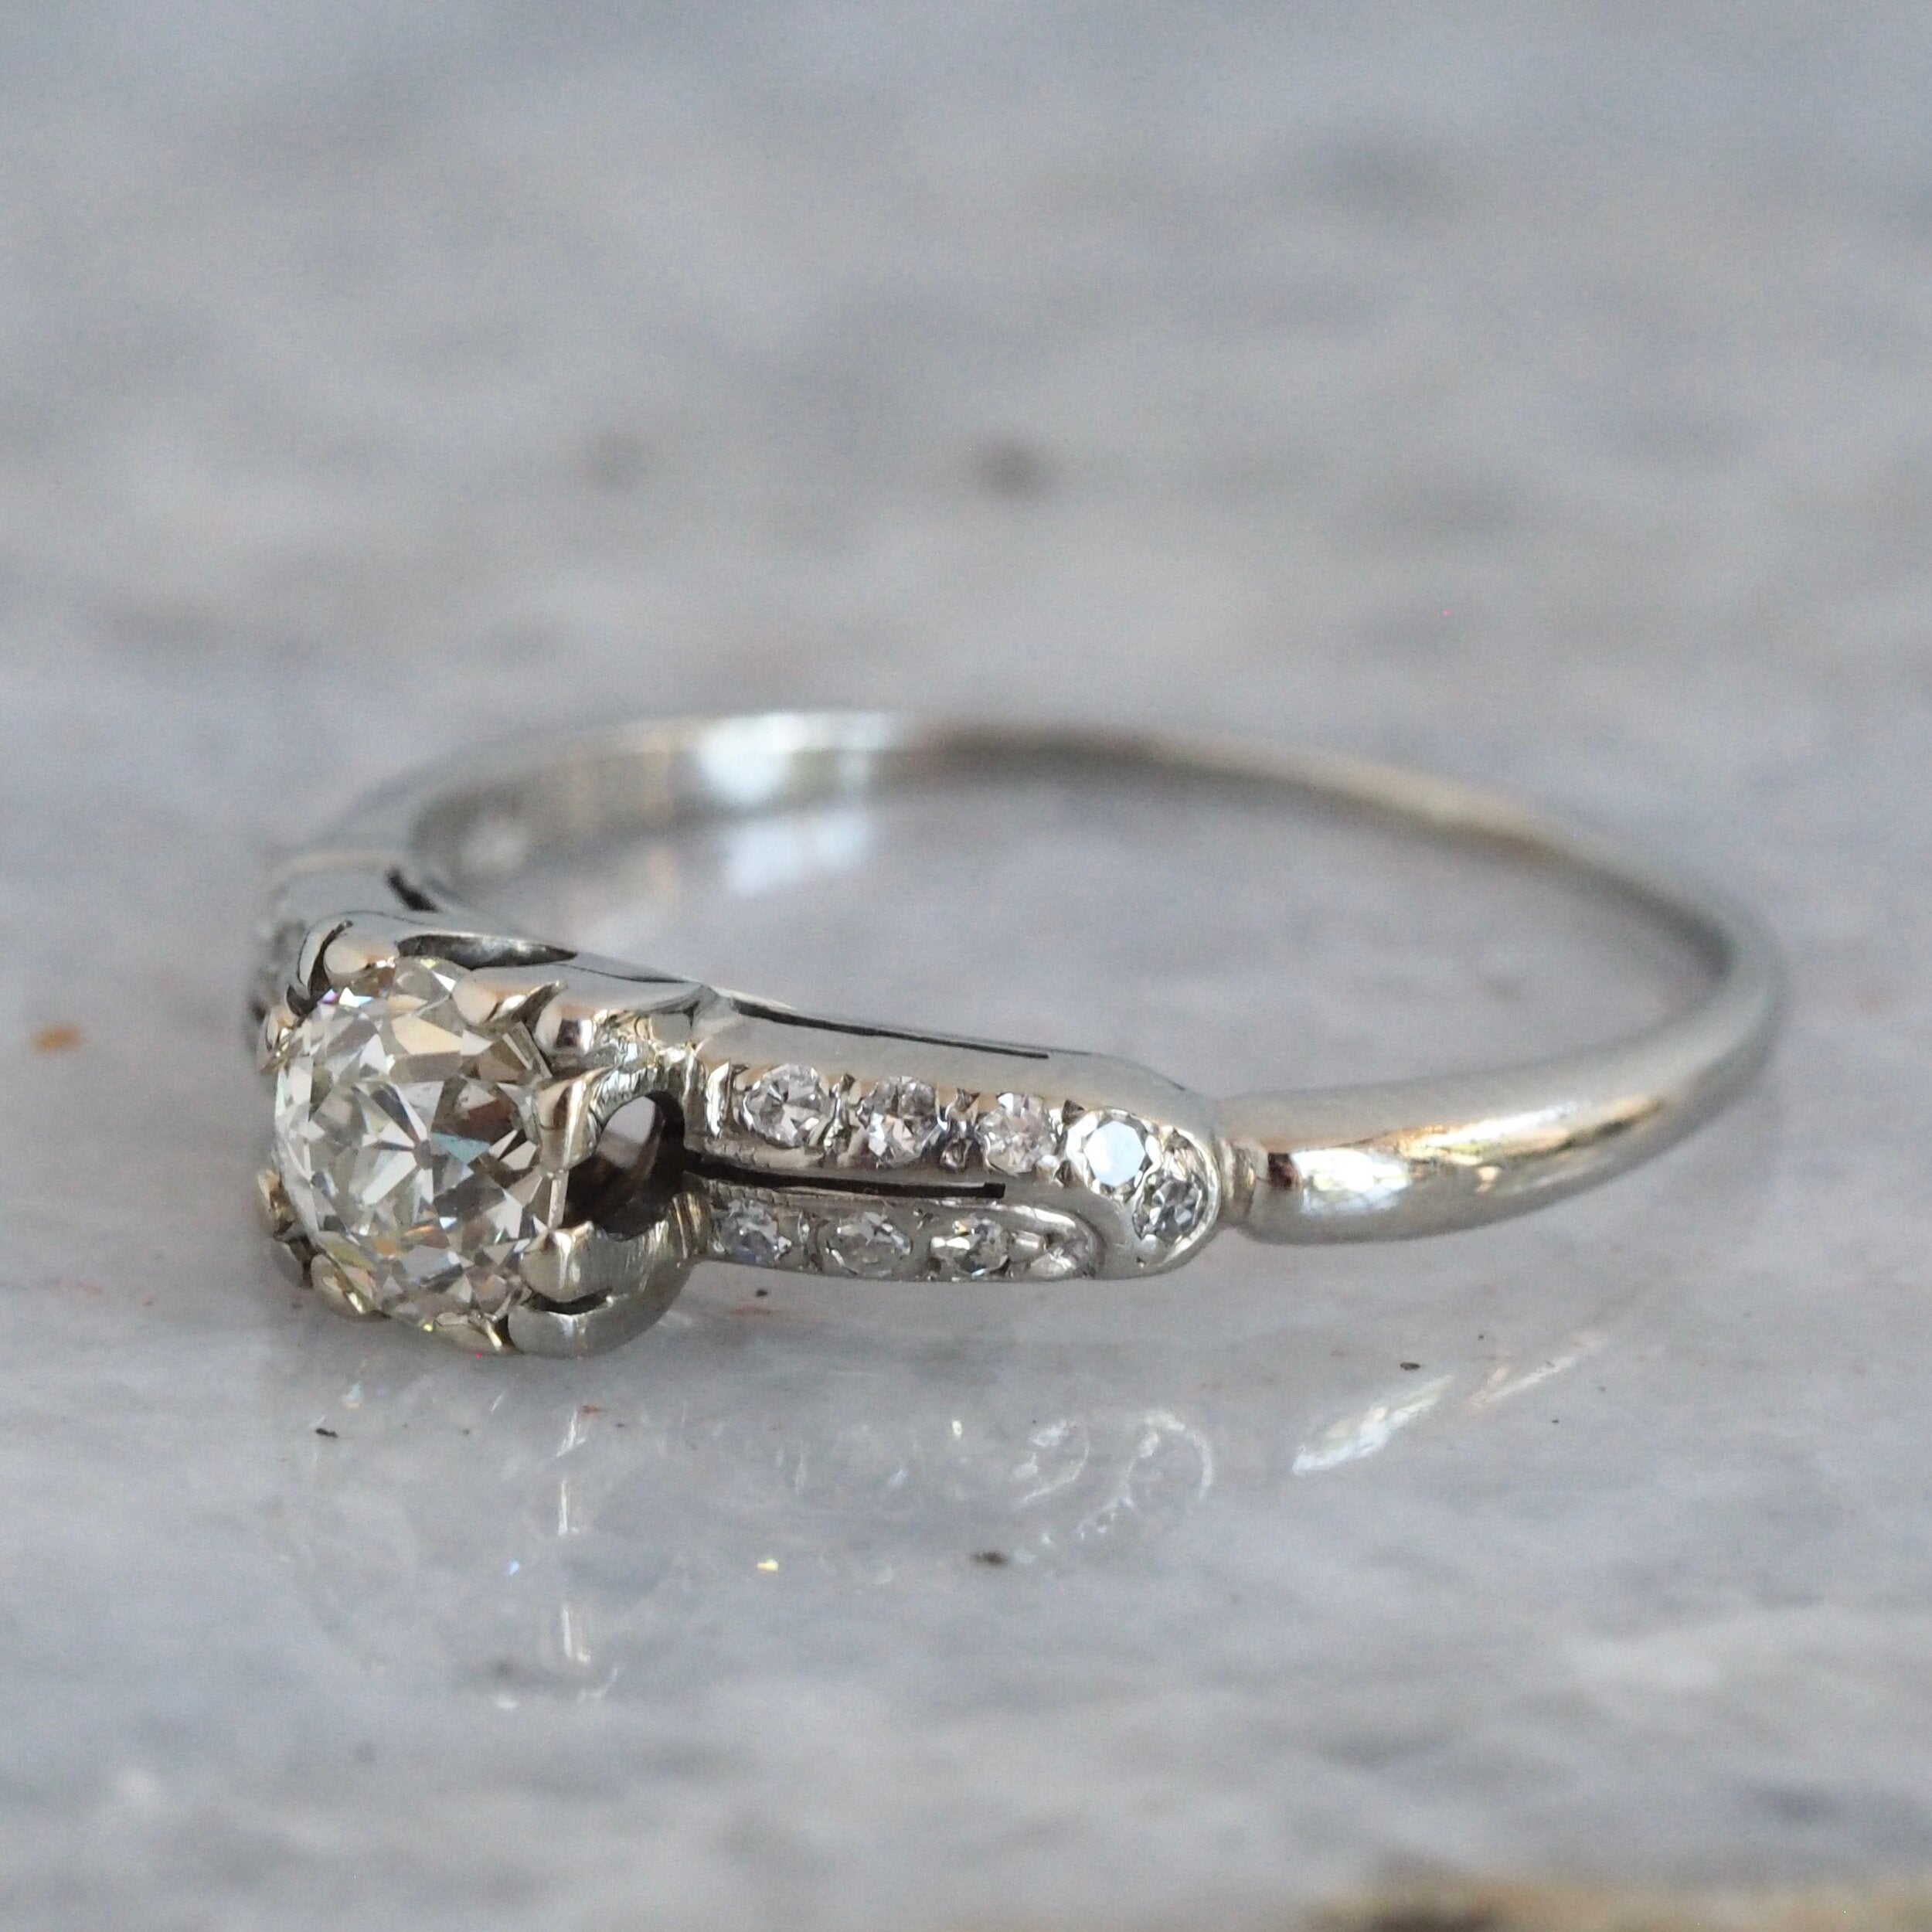 Antique Vintage Diamond Ring - Sivan Lotan Jewelry - סיון לוטן תכשיטים